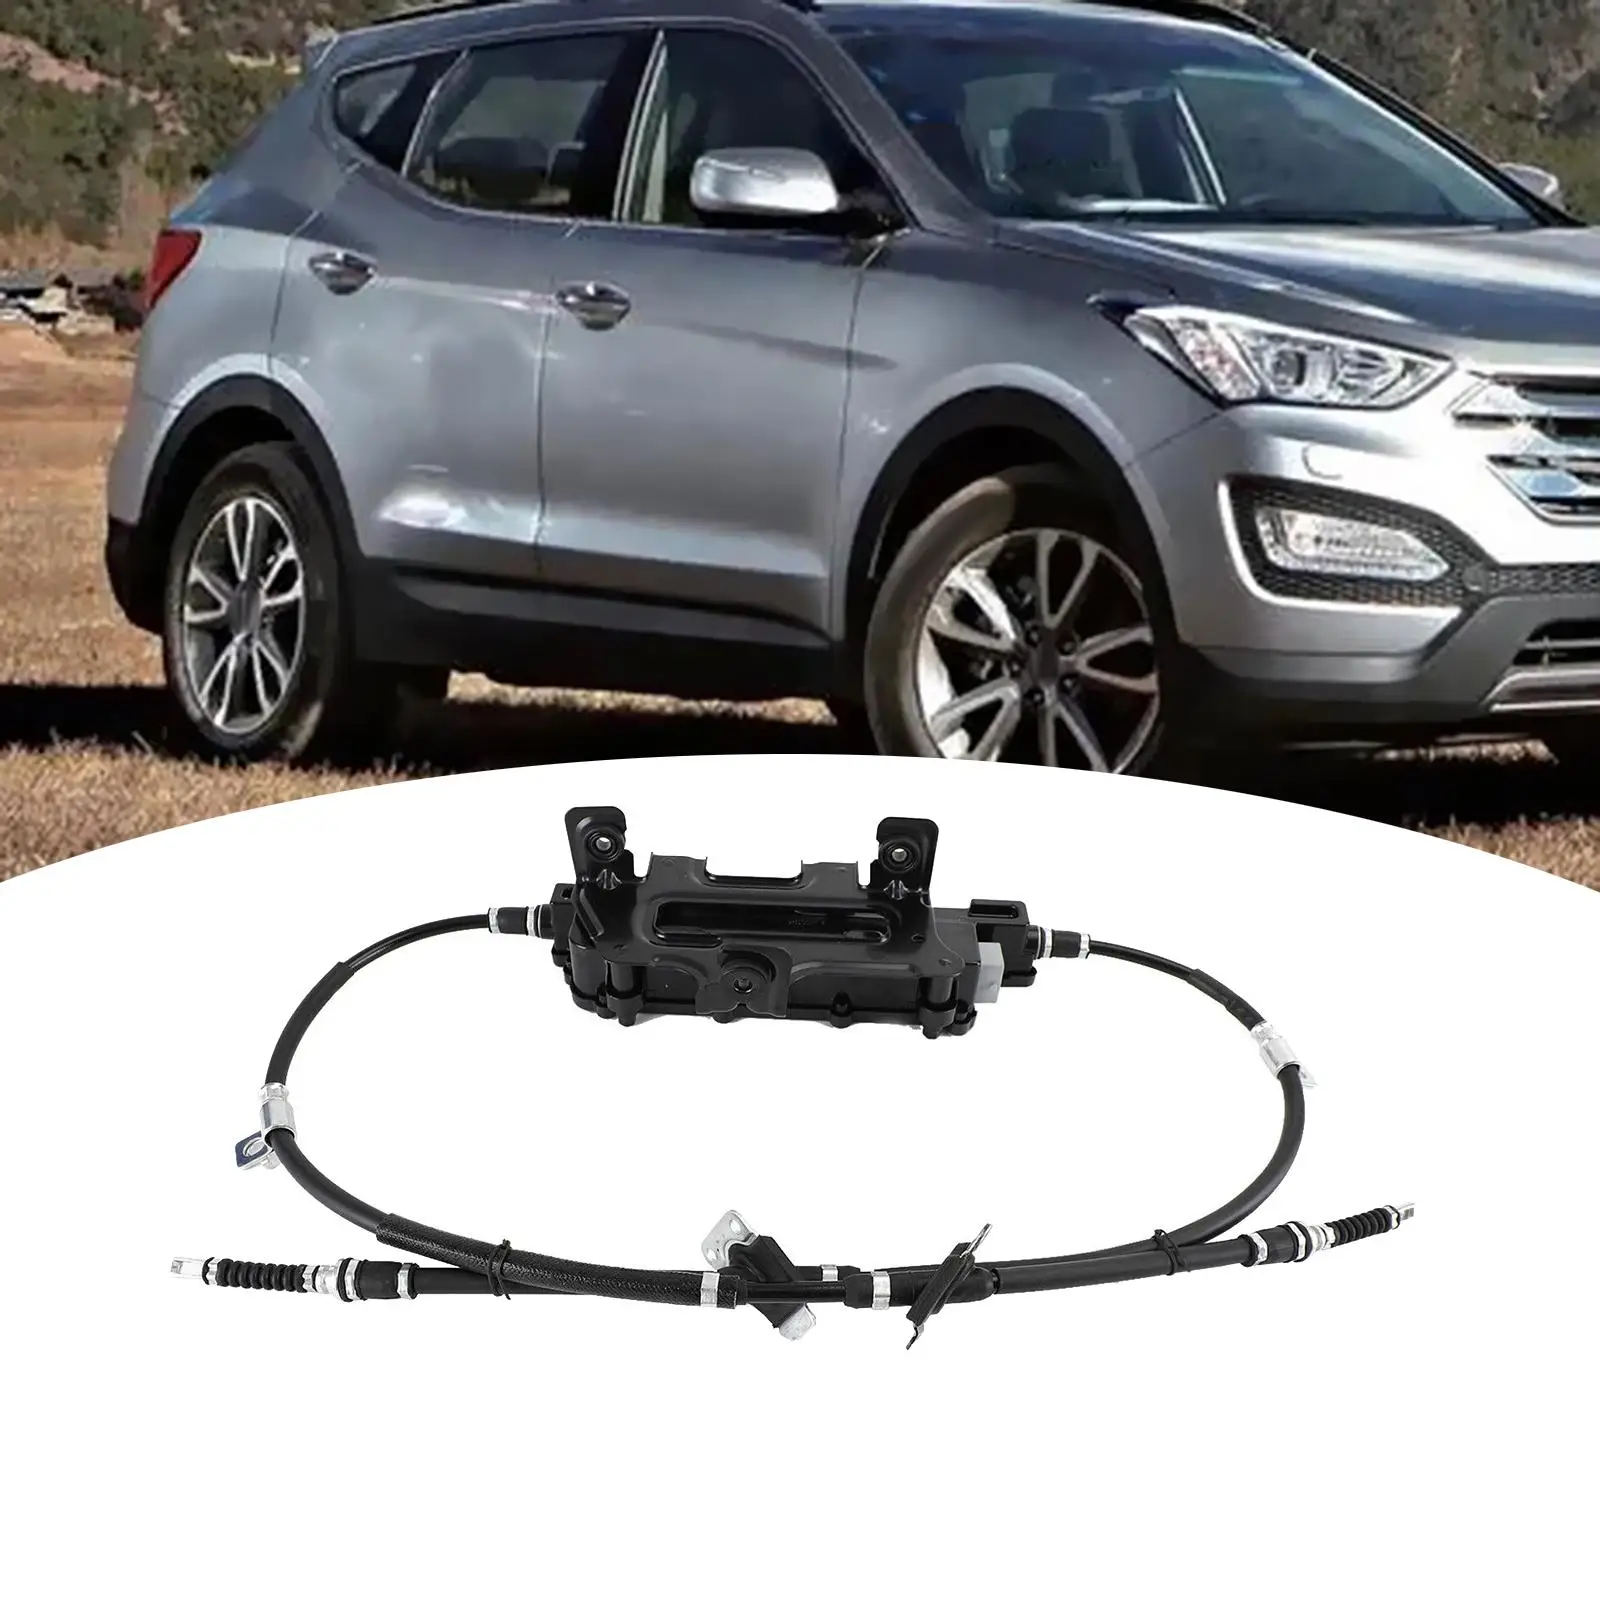 Parking Brake Module Assy Electronic 59700-b8700 for Hyundai Santa FE